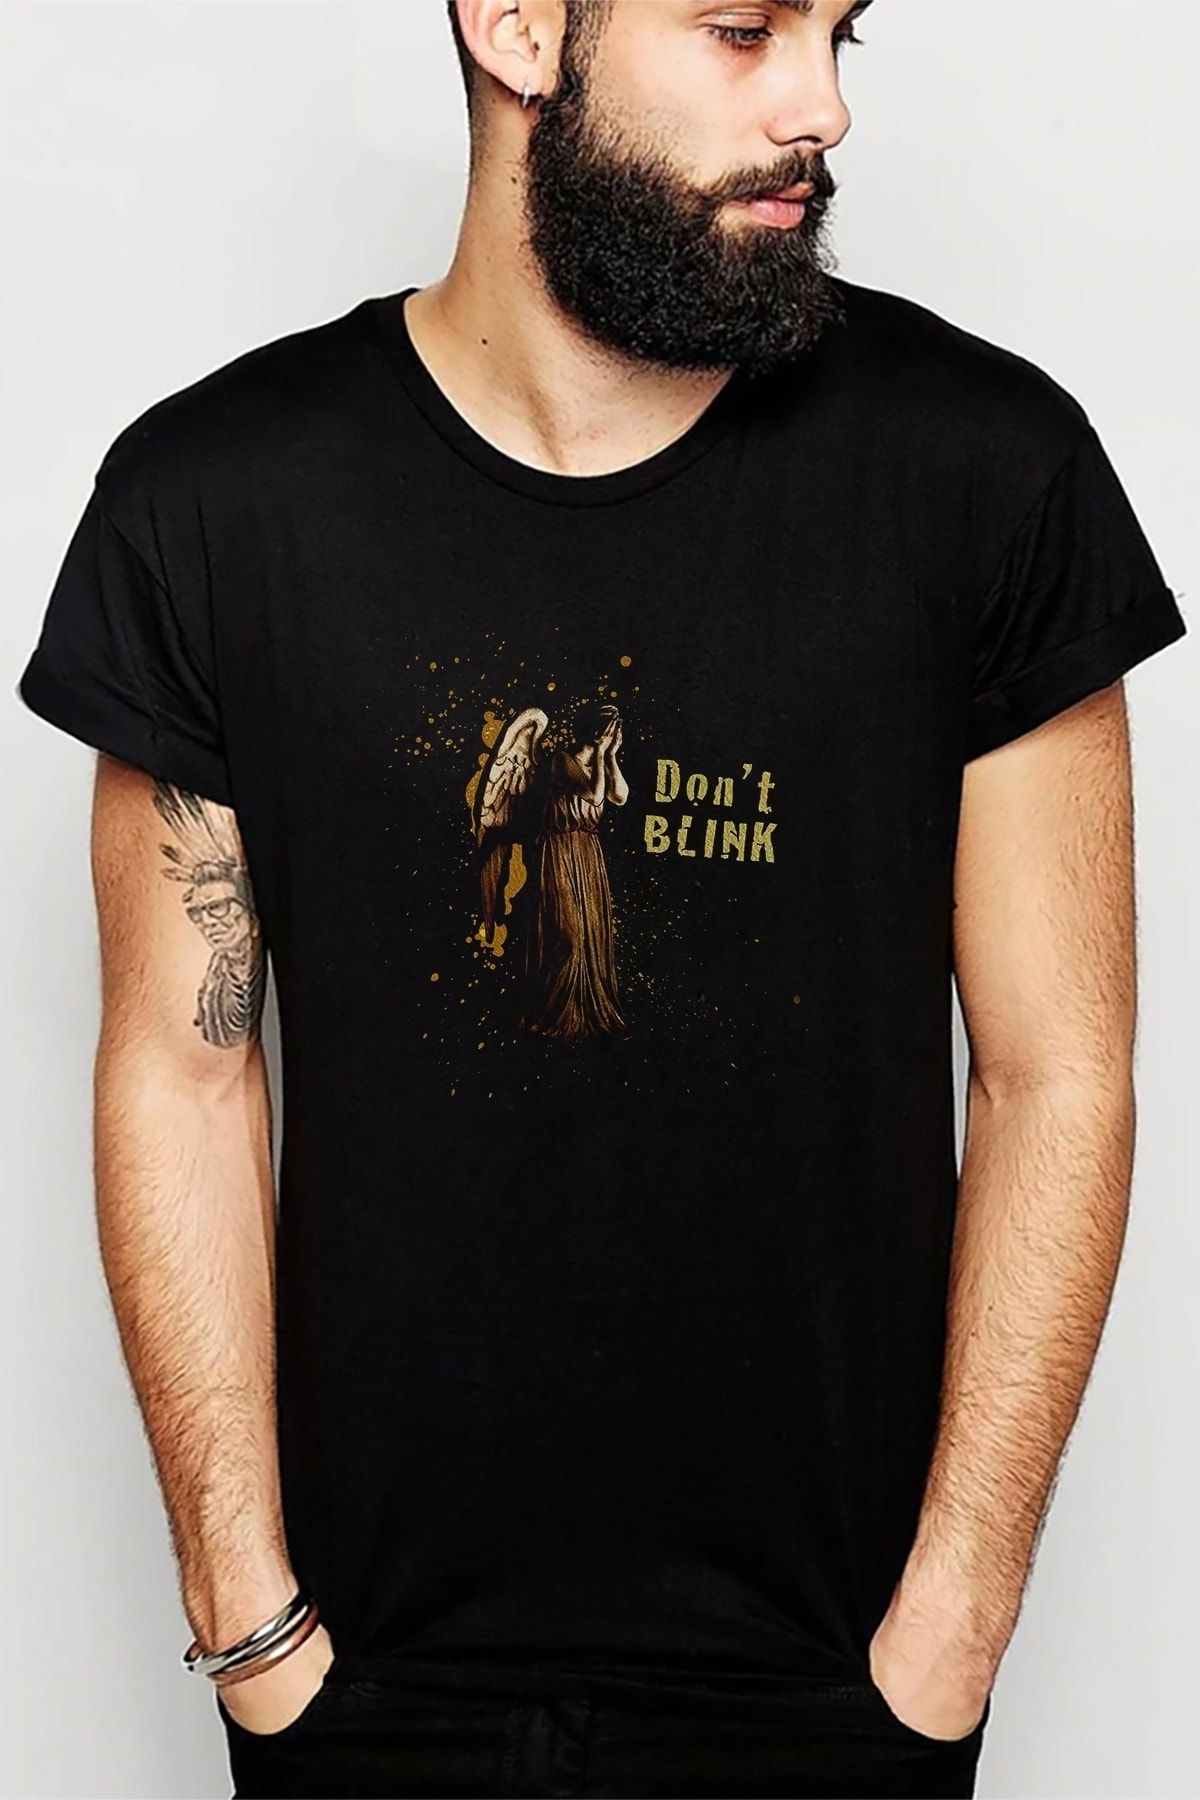 QIVI Doctor Who Don't Blink Baskılı Siyah Erkek Örme Tshirt T-shirt Tişört T Shirt